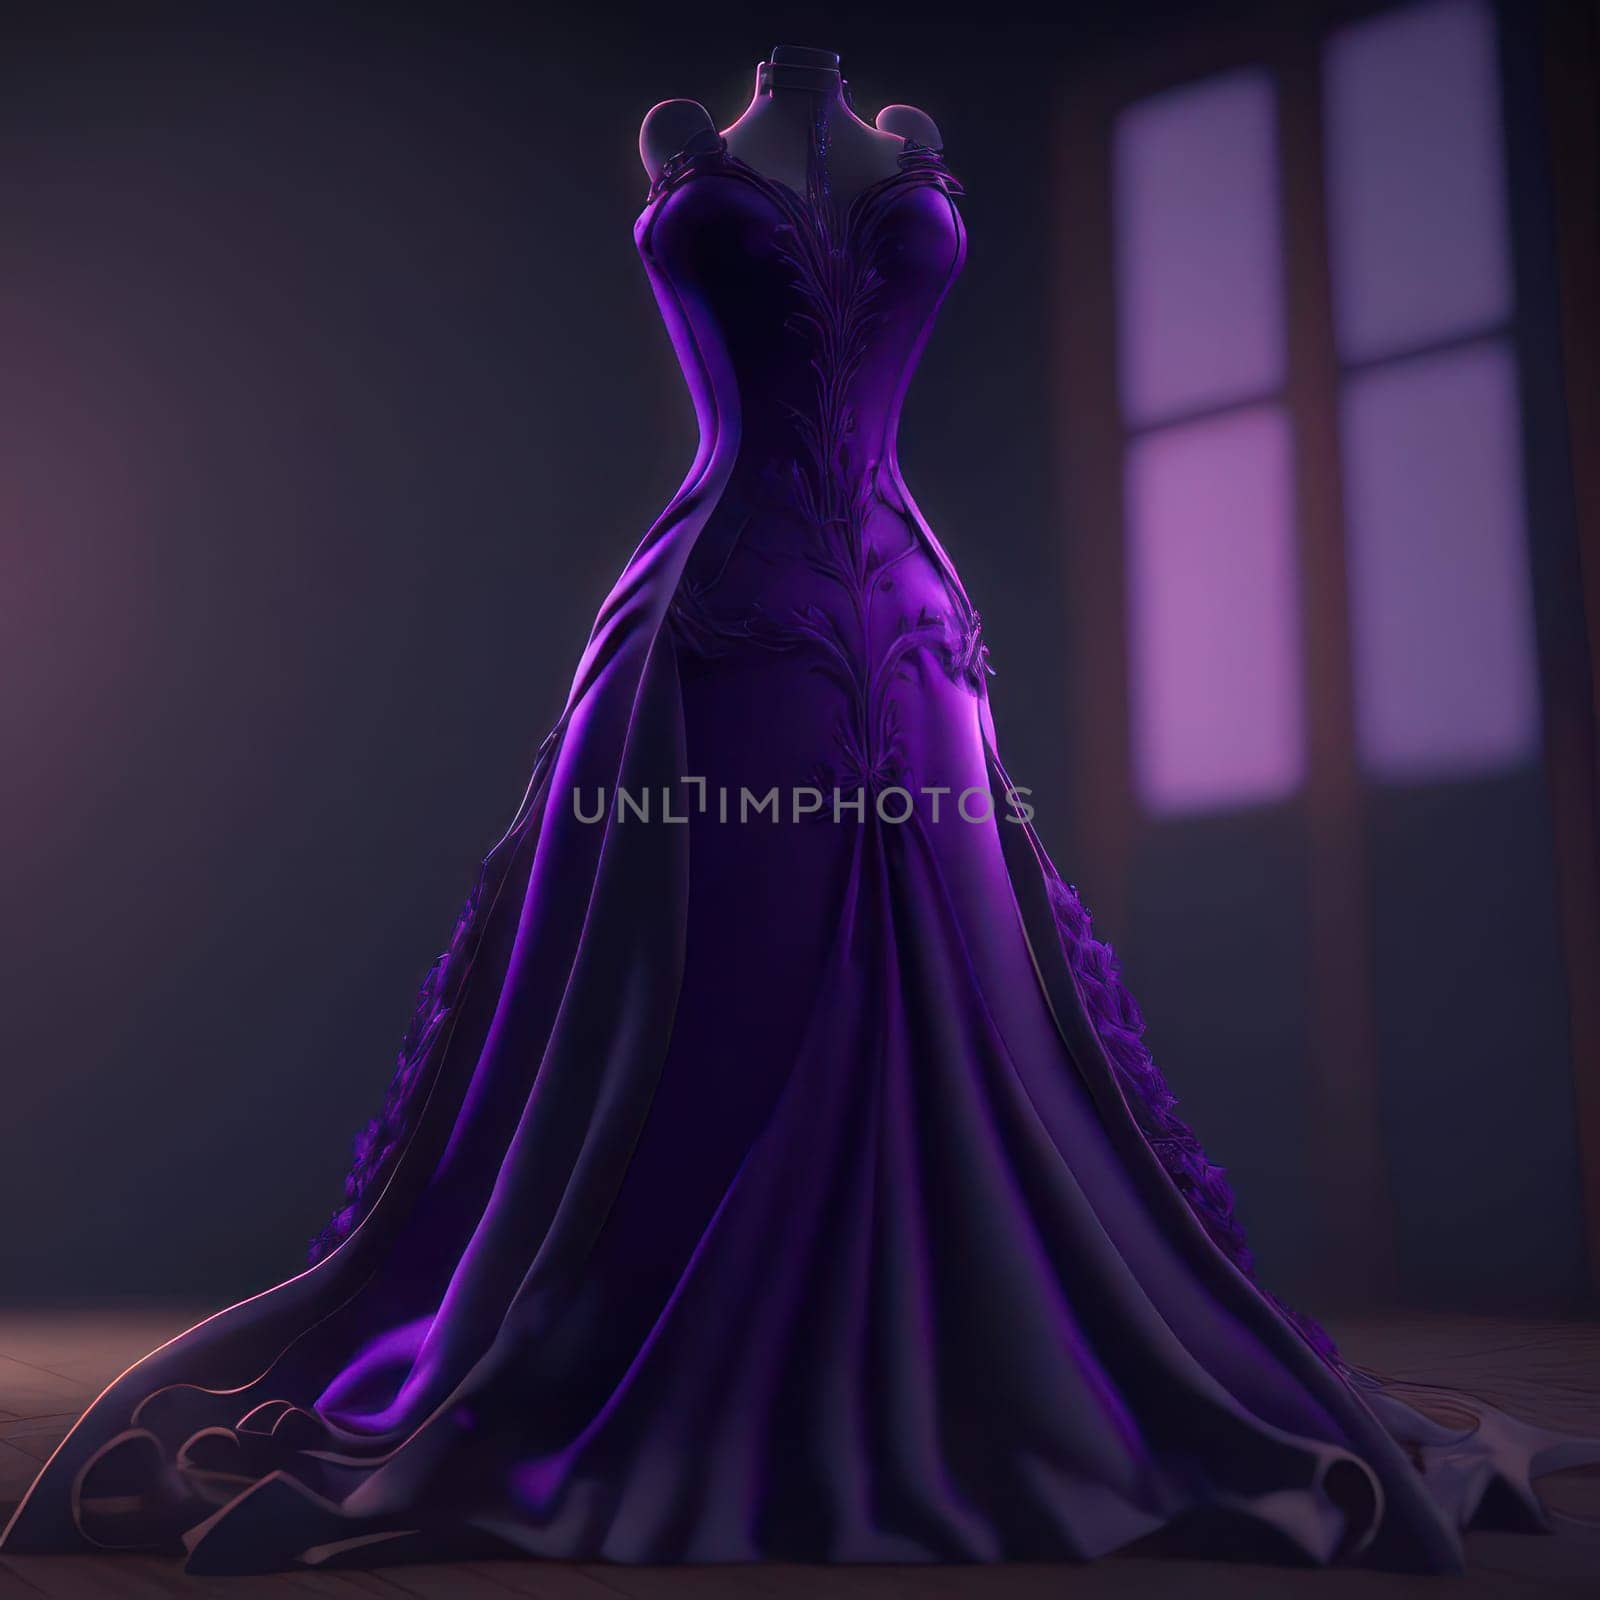 Purple dress. Image created by AI